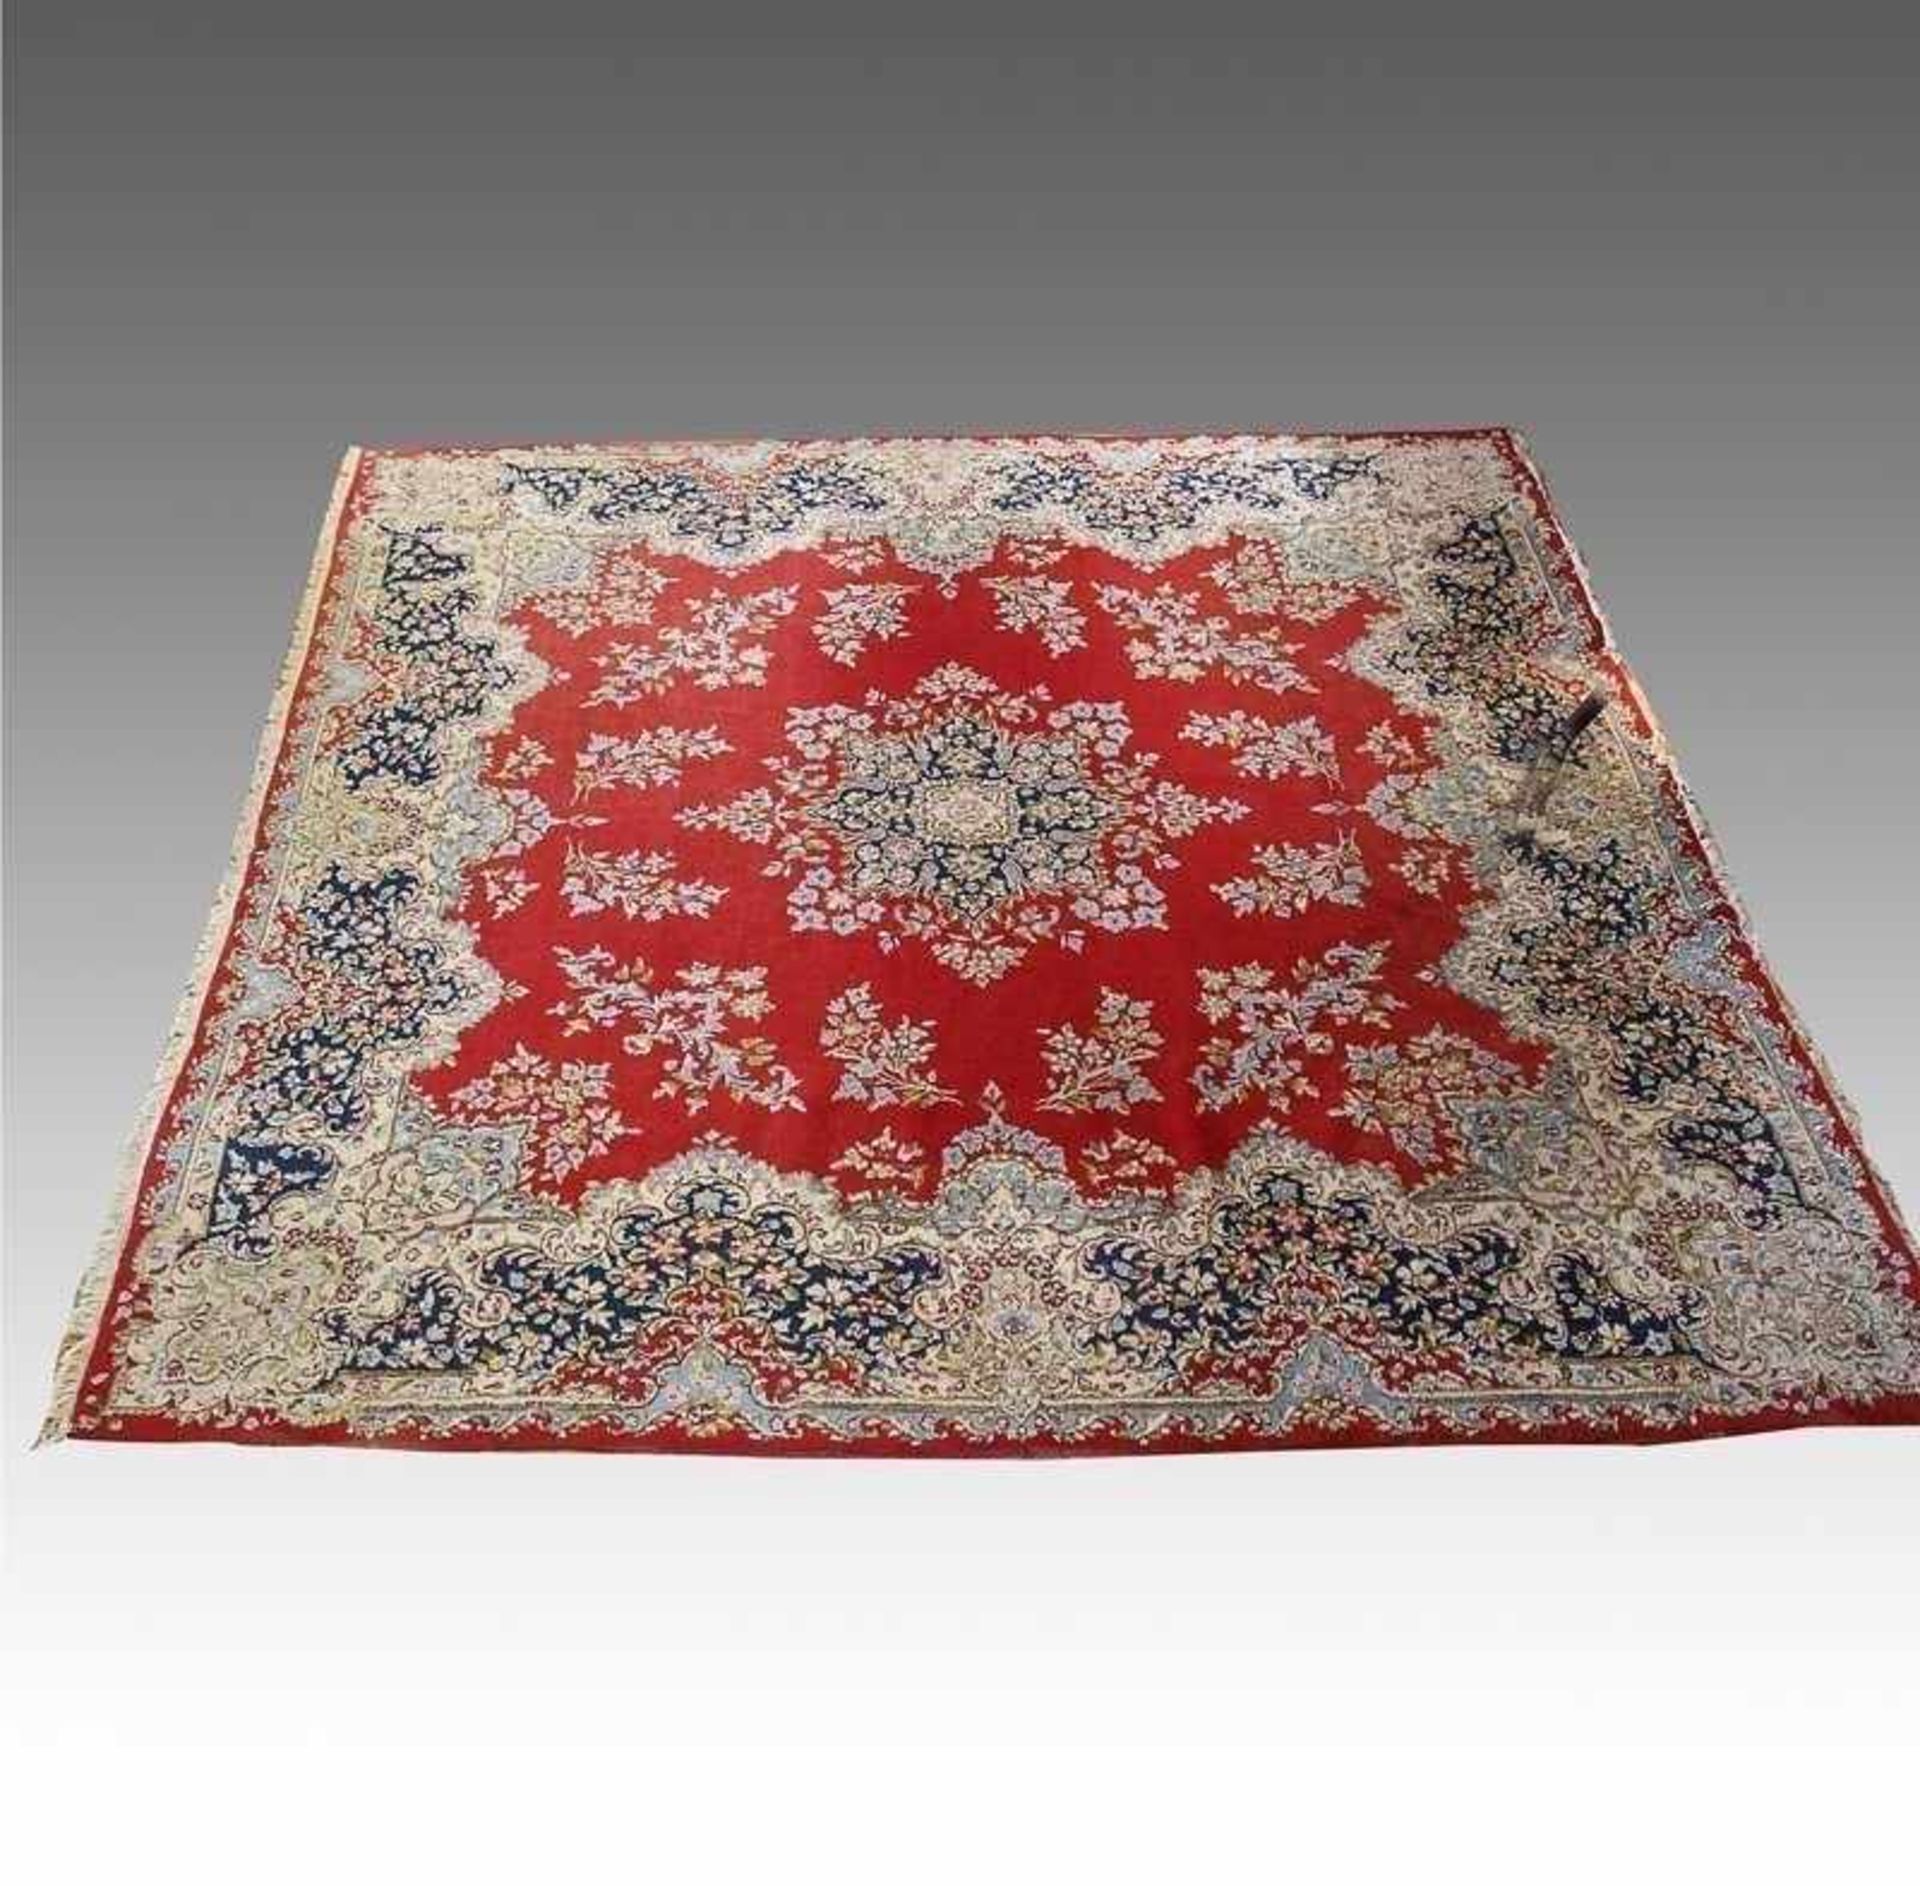 Orientteppich Persien, Kirman, Baumwolle/Wolle, rotgrundiges Feld mit Sternmedaillon, geschweifte